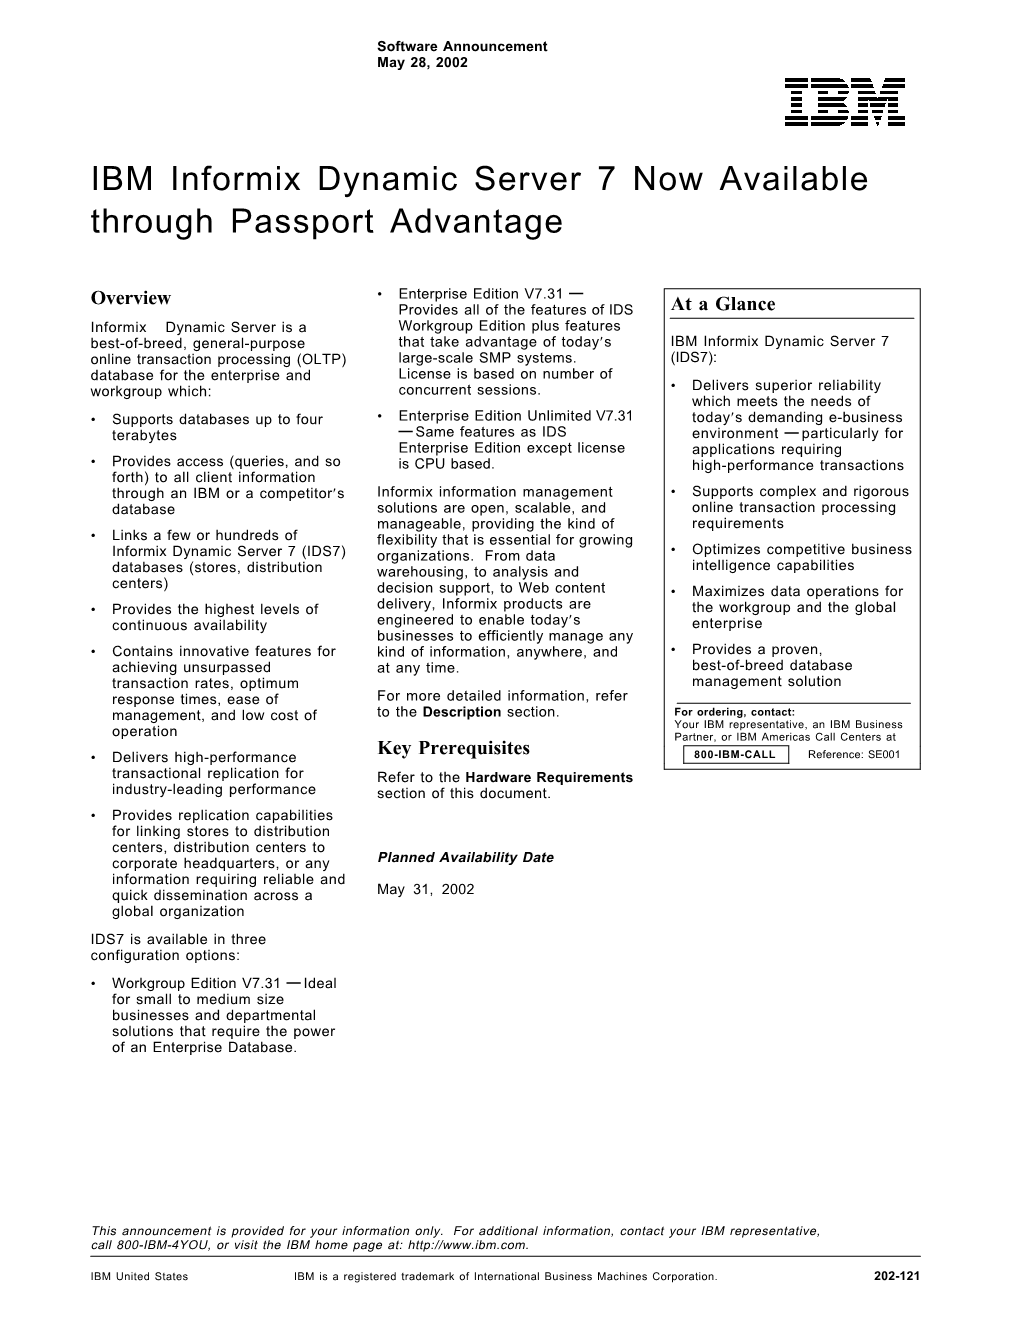 IBM Informix Dynamic Server 7 Now Available Through Passport Advantage